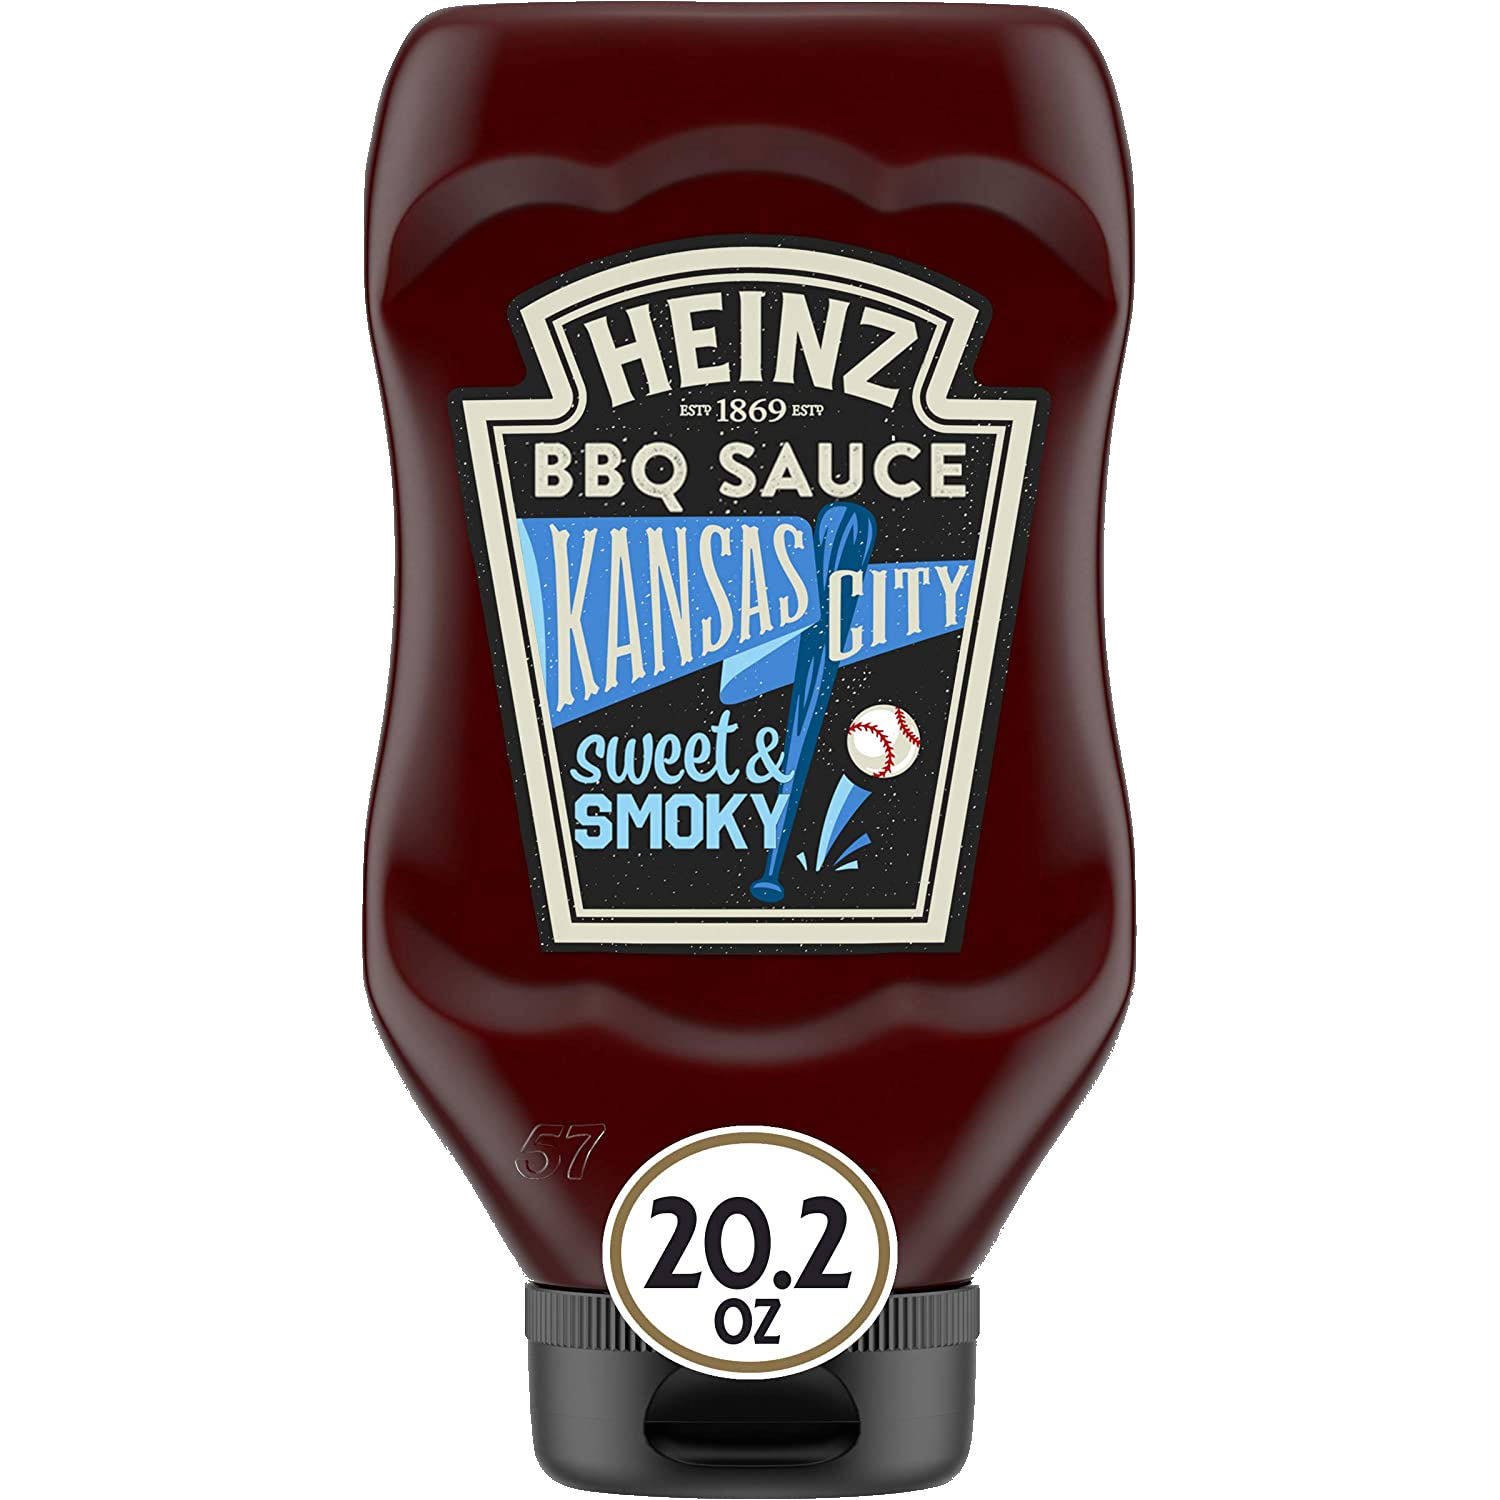 Heinz Kansas City Style Sweet & Smoky BBQ Sauce 20.2 oz. Bottle